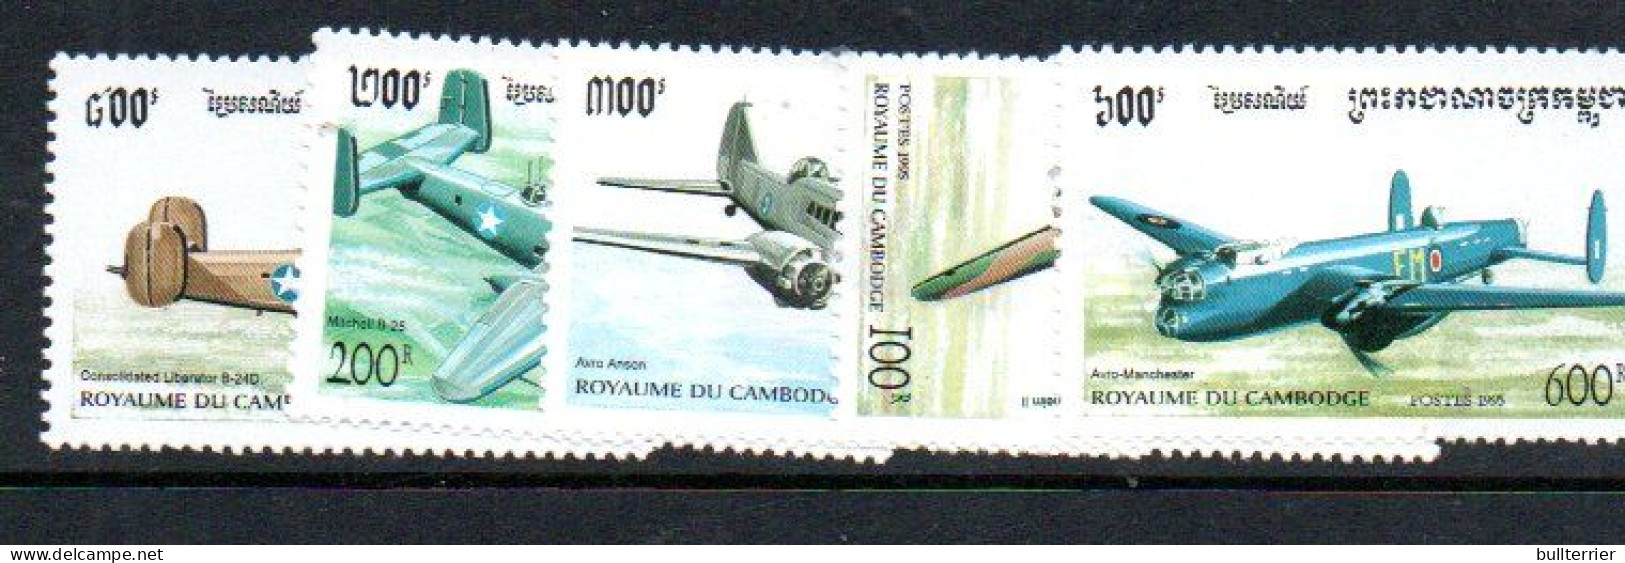 CAMBODIA - 1995 - WARPLANES SET OF 5  MINT NEVER HINGED - Cambodia